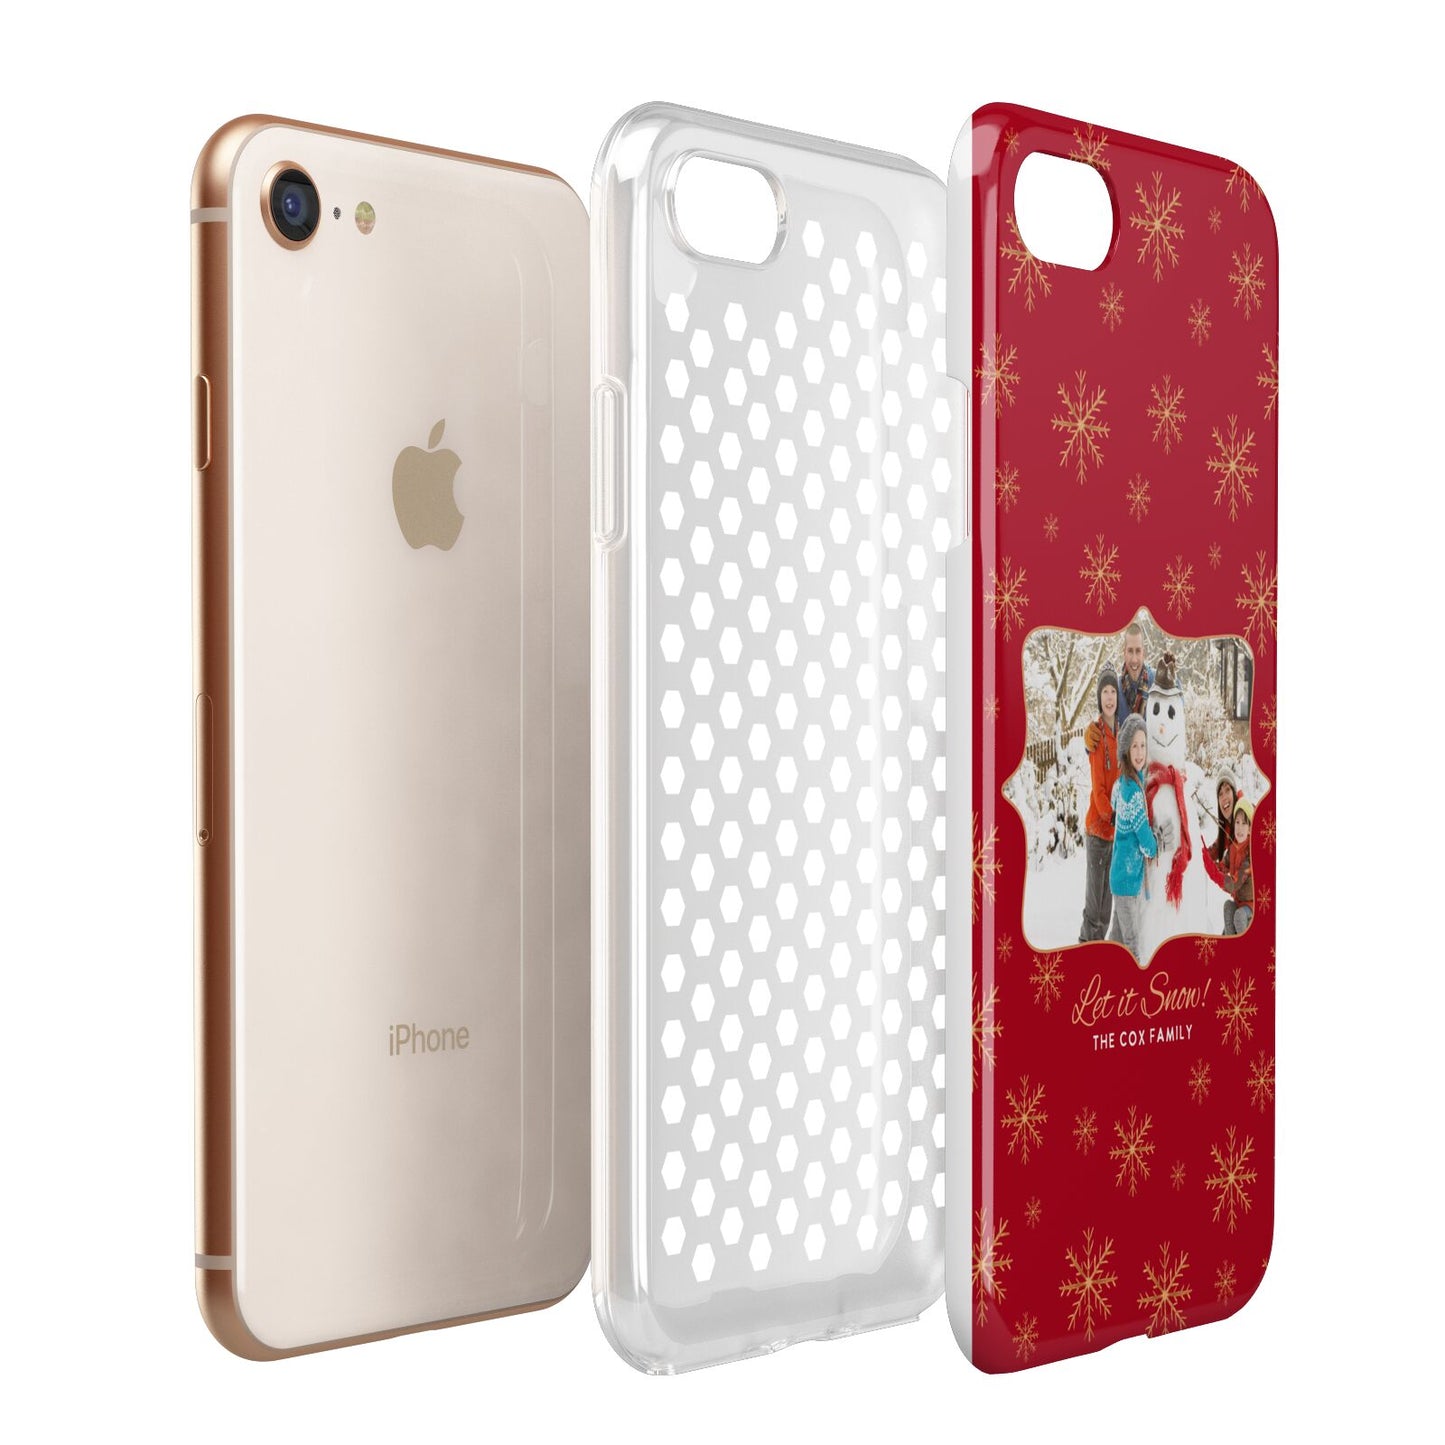 Let it Snow Christmas Photo Upload Apple iPhone 7 8 3D Tough Case Expanded View